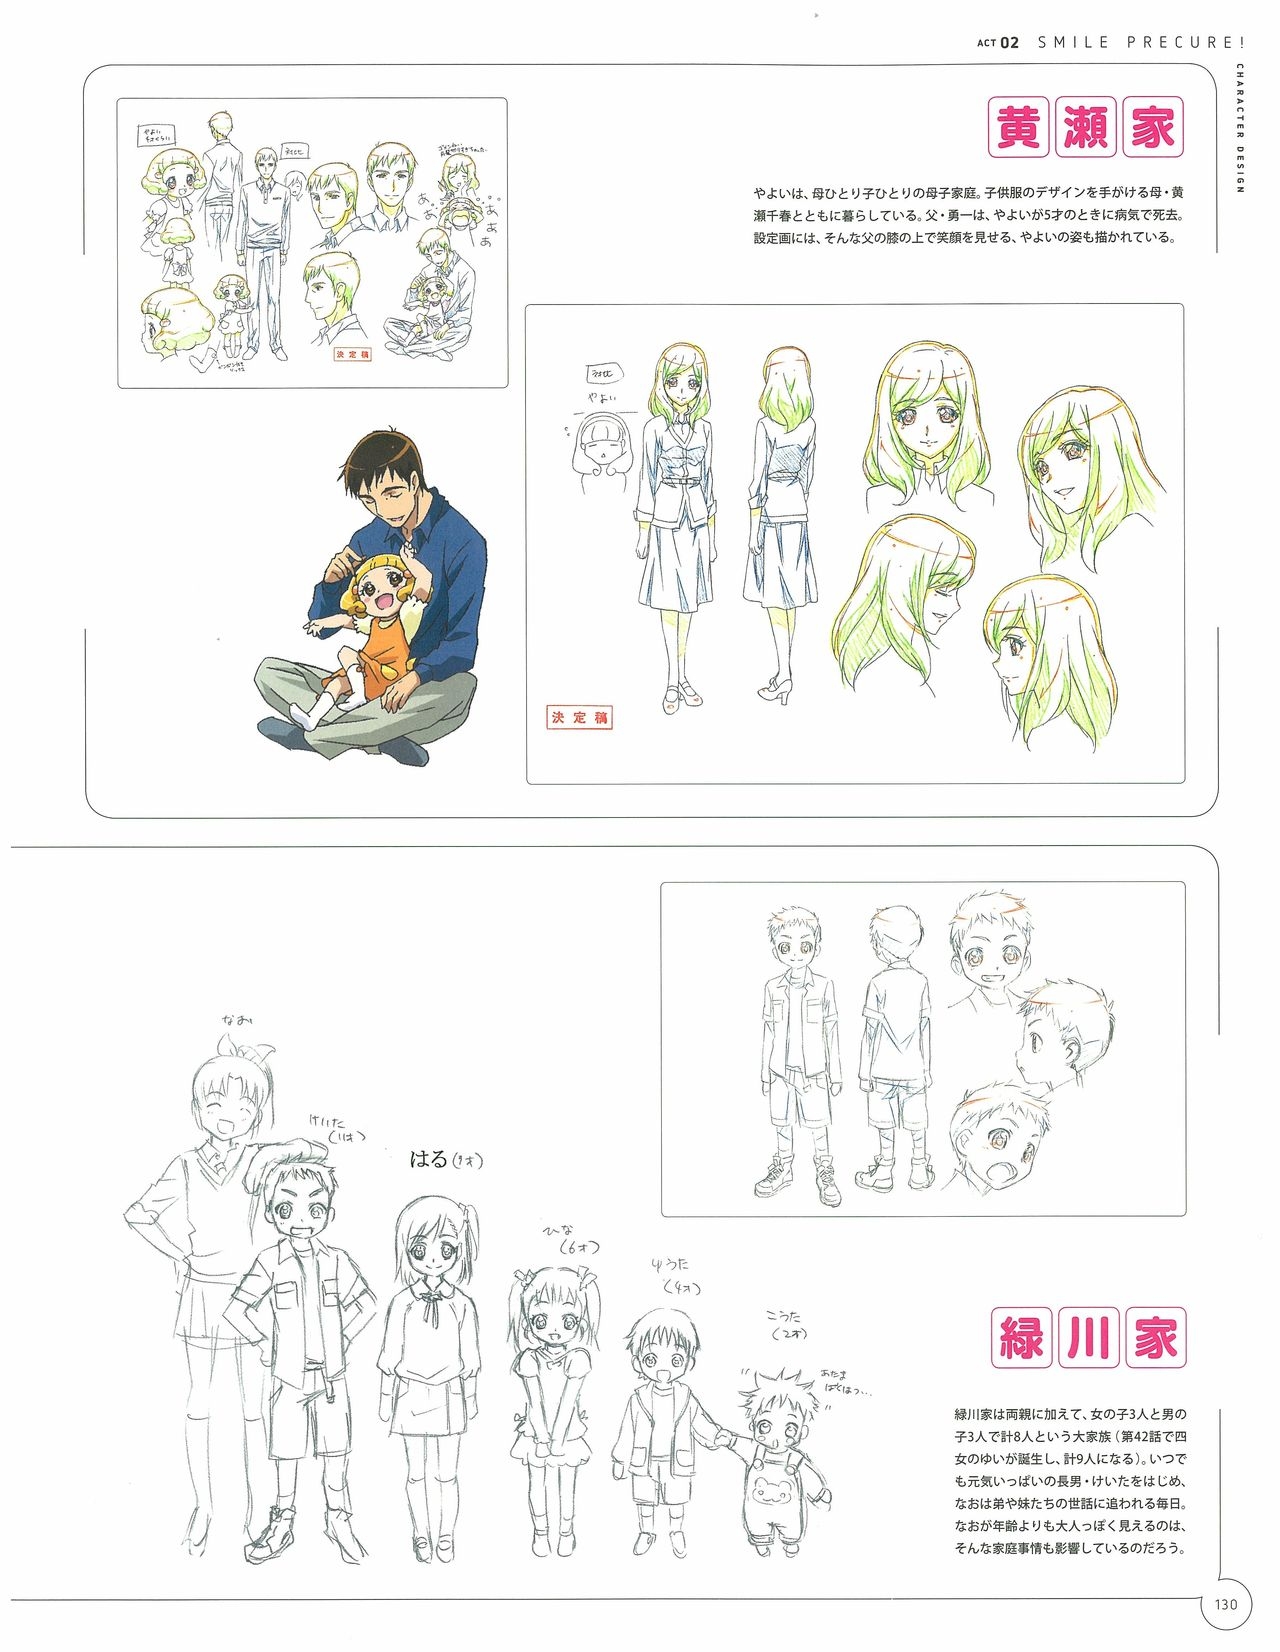 Kawamura Toshie - Toei Animation Precure Works 130